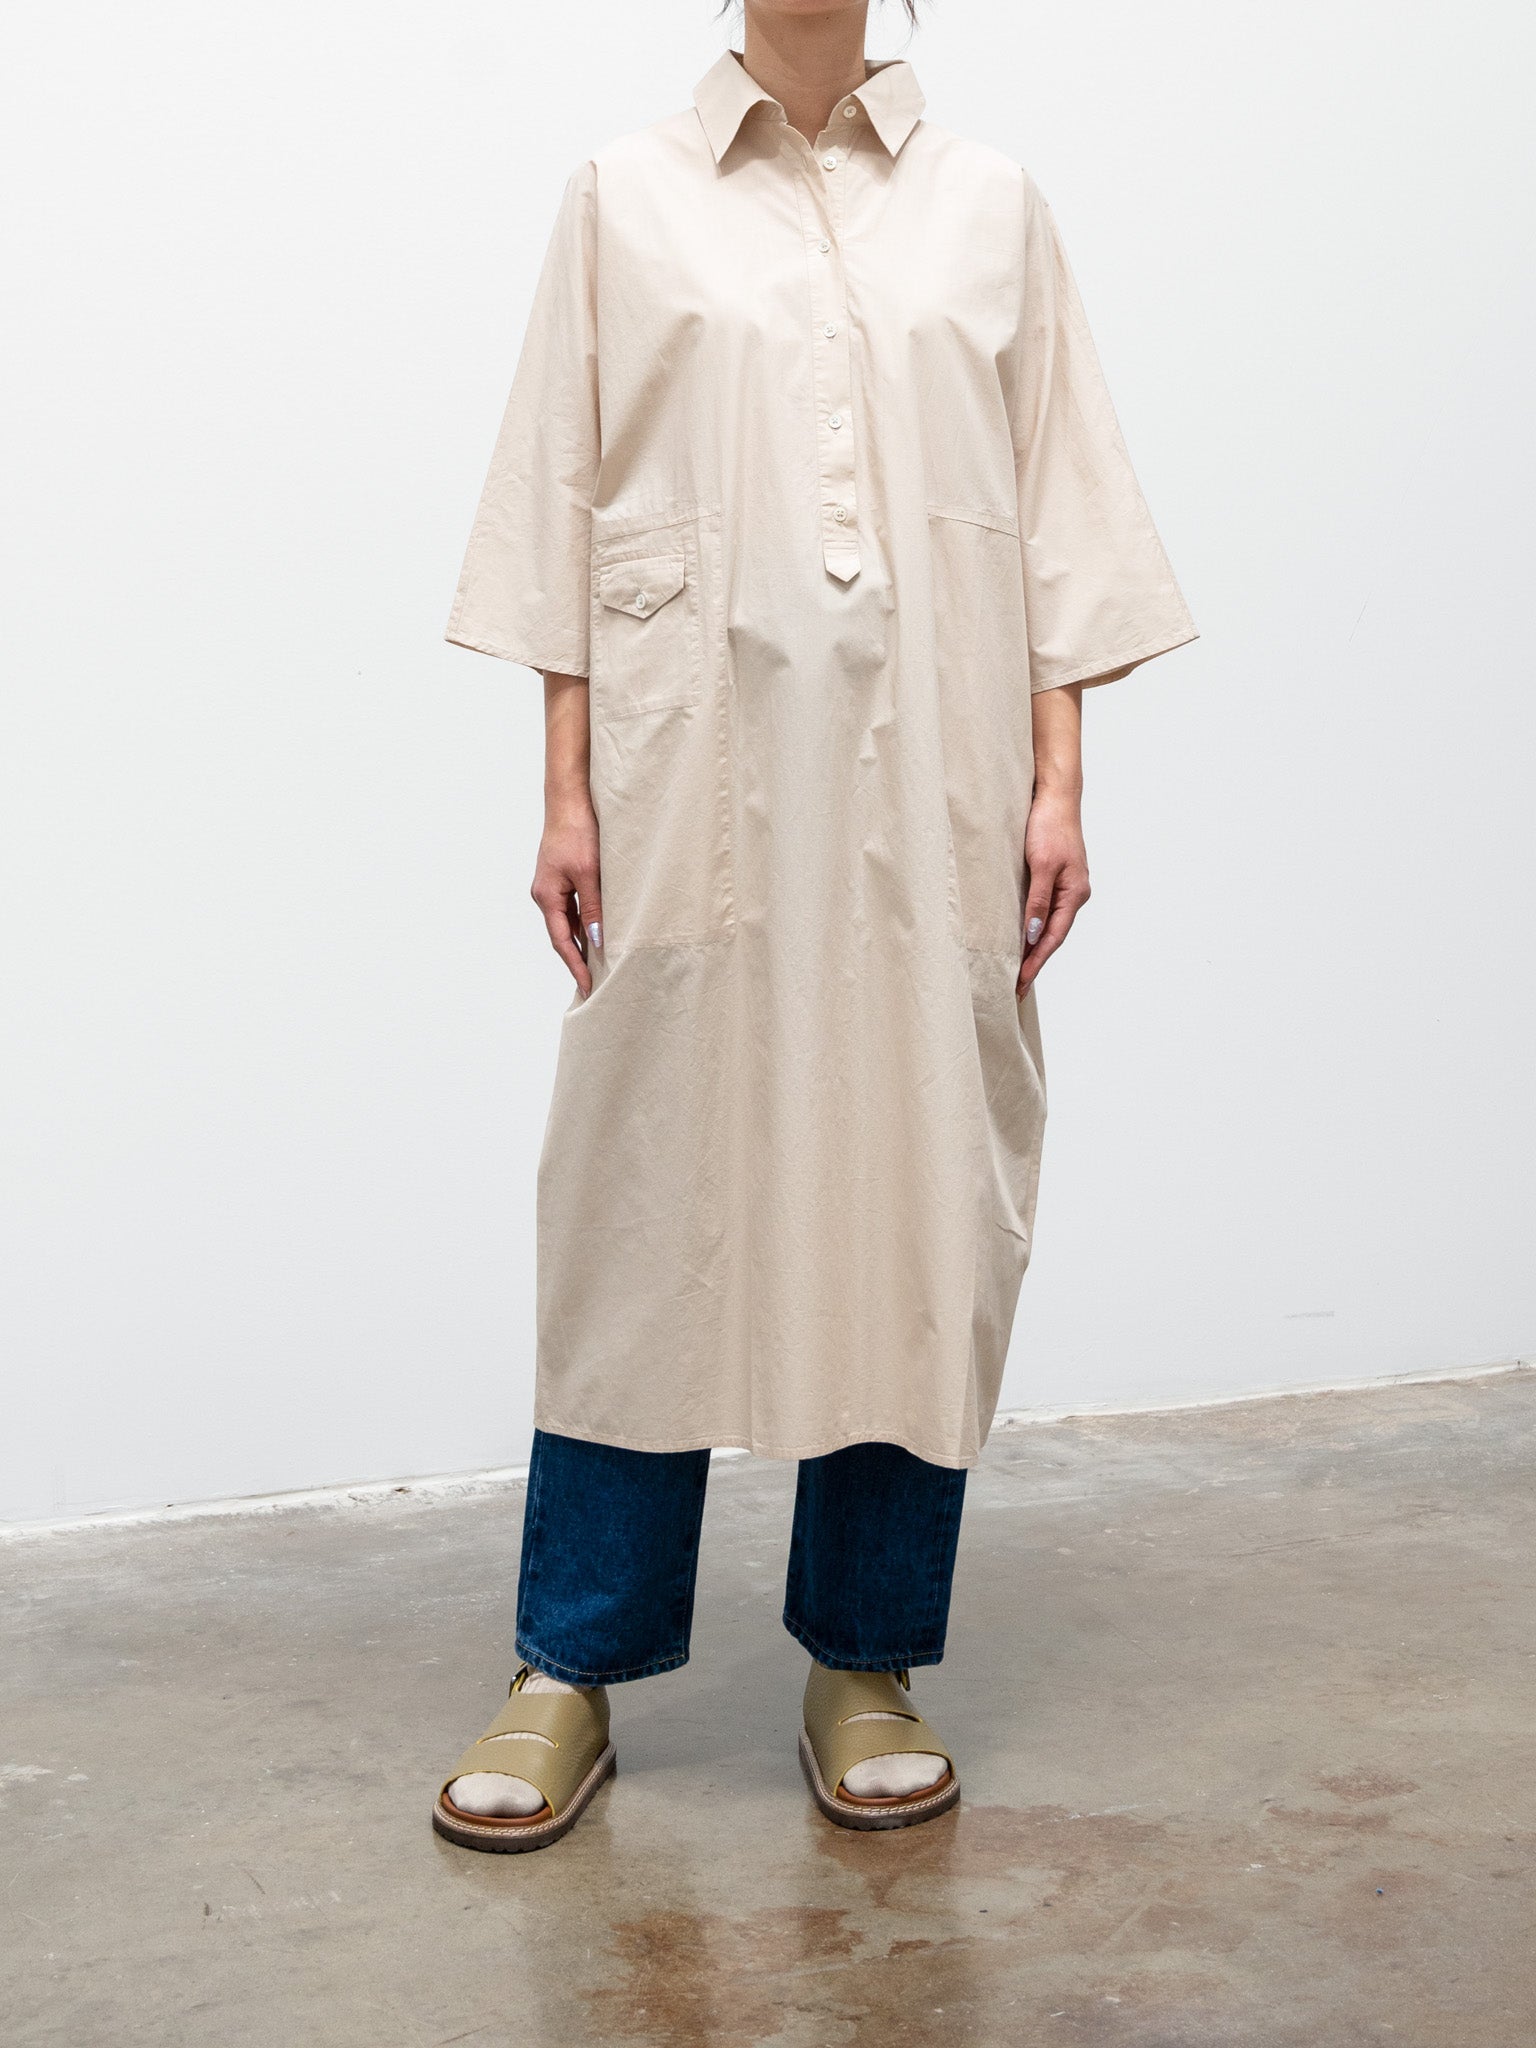 Namu Shop - Jan Machenhauer Mina Dress - Indigo Cotton Poplin